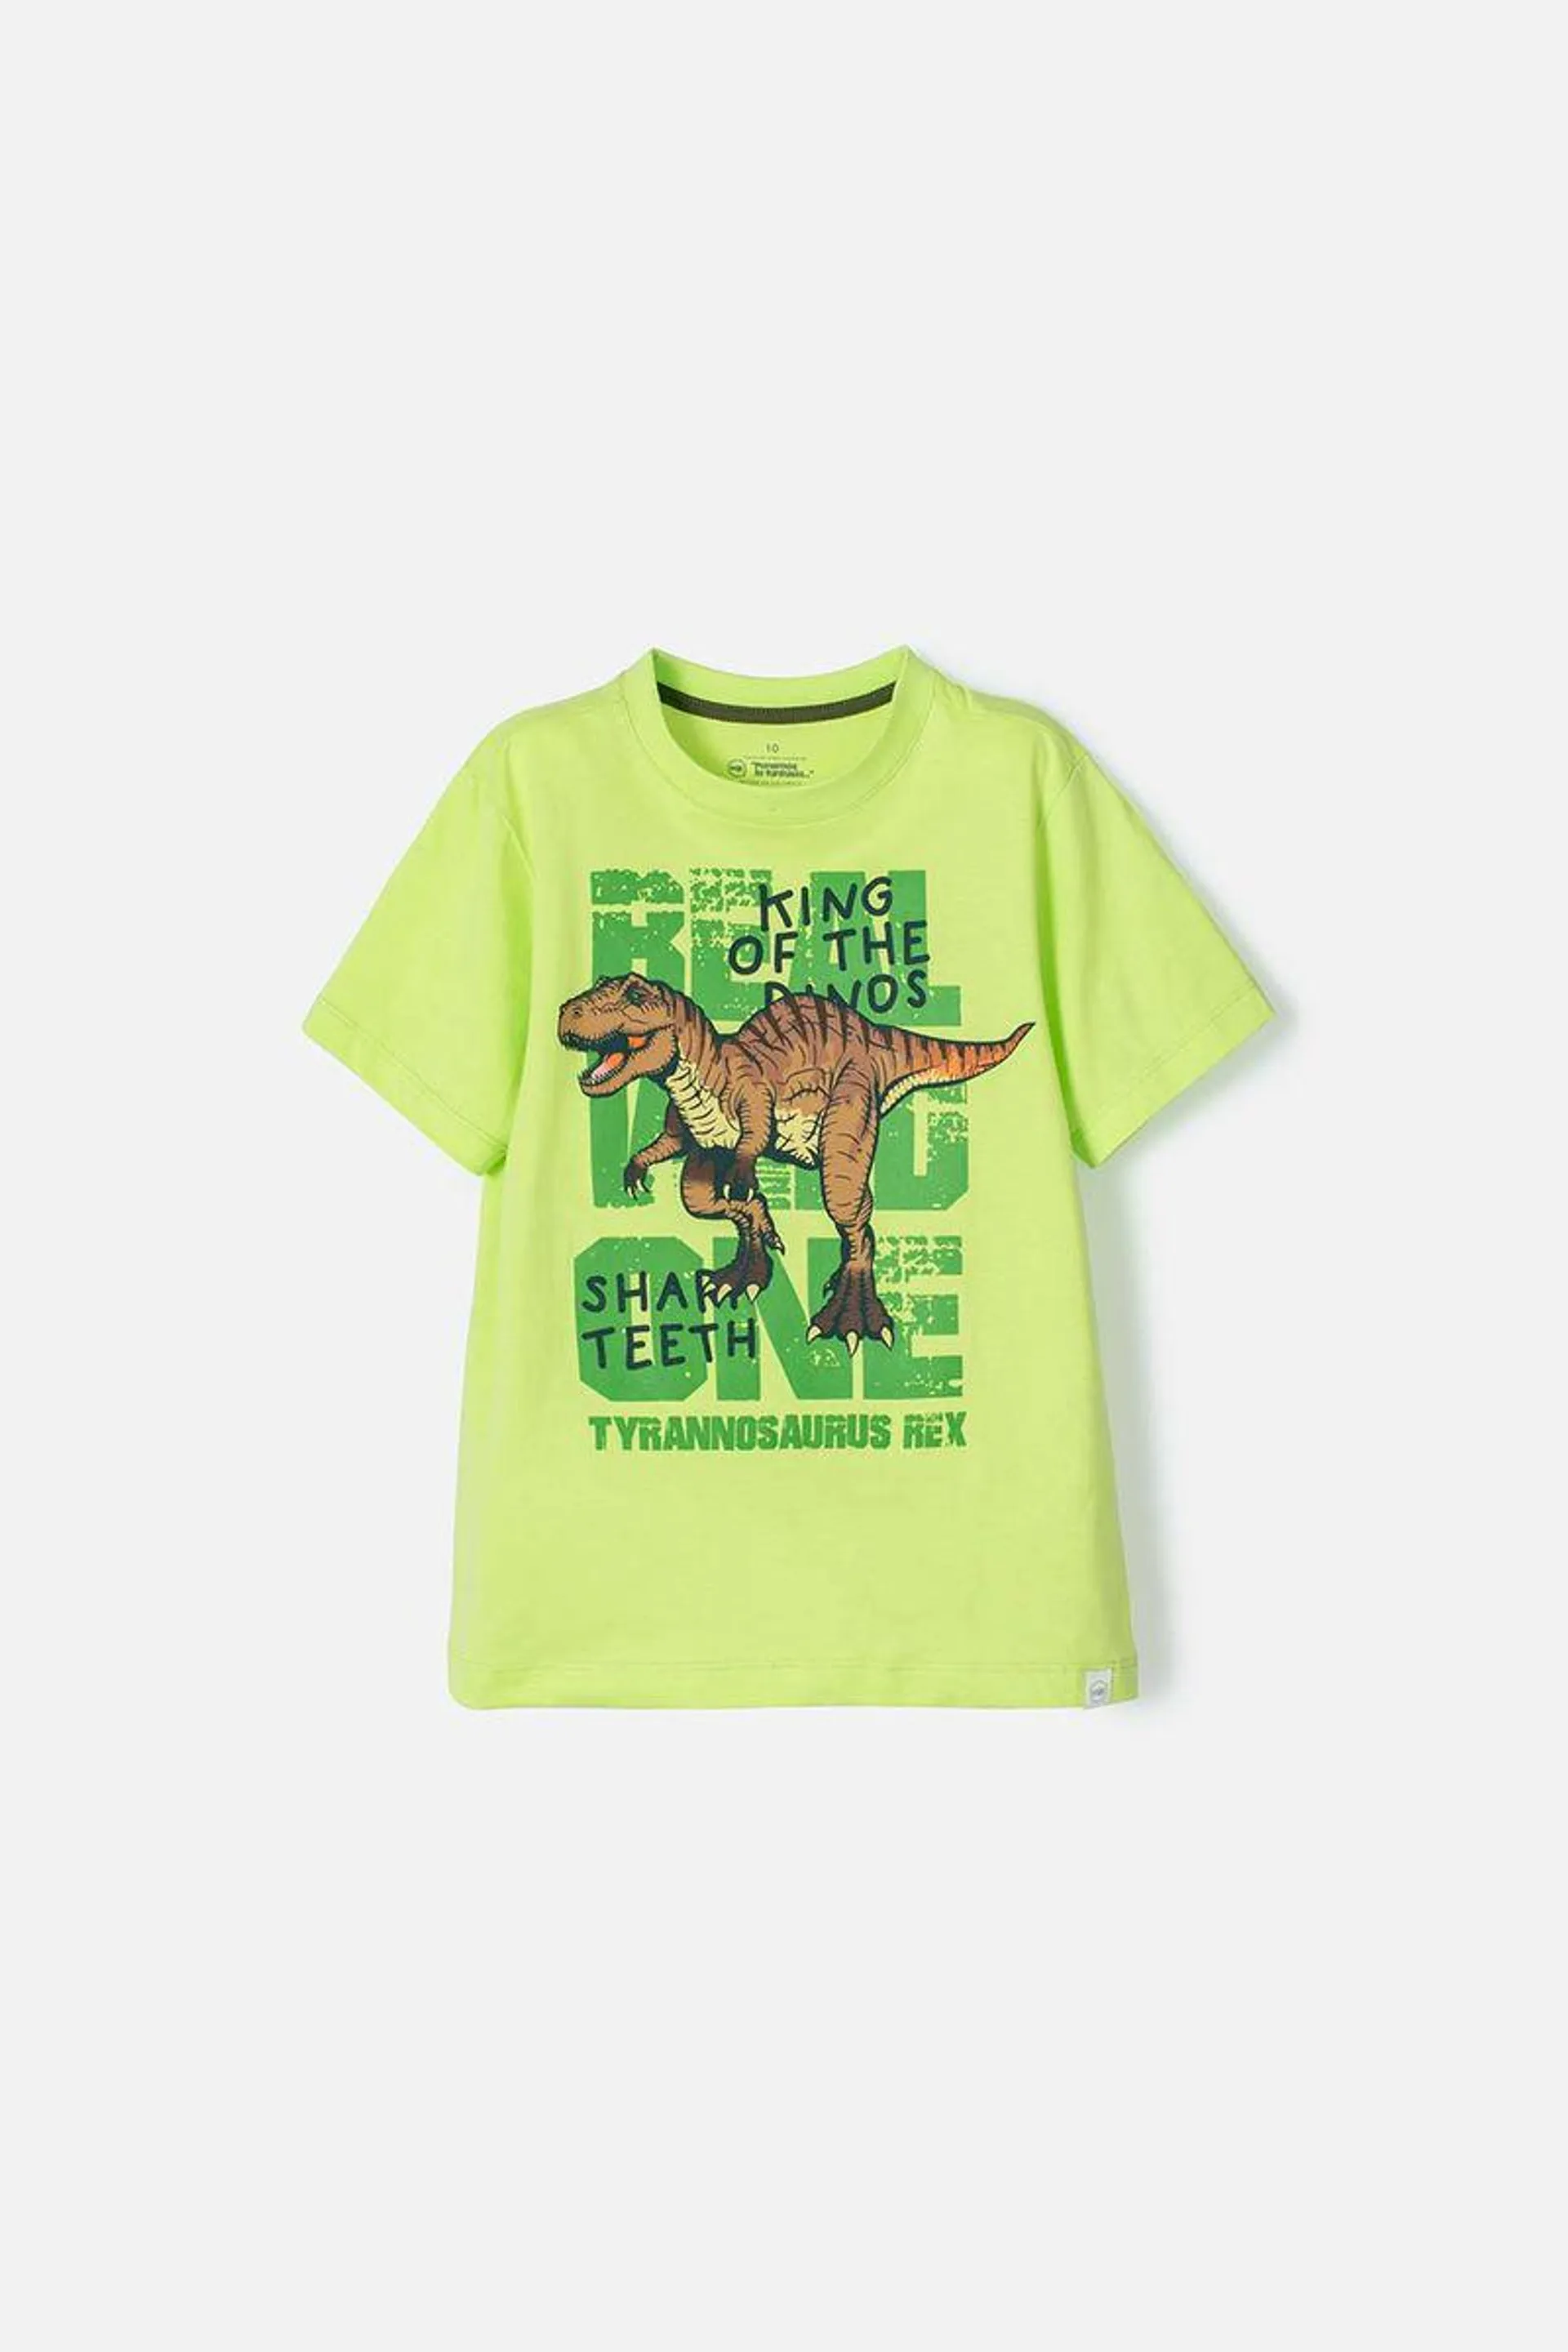 Camiseta de niño,manga corta verde de Mic